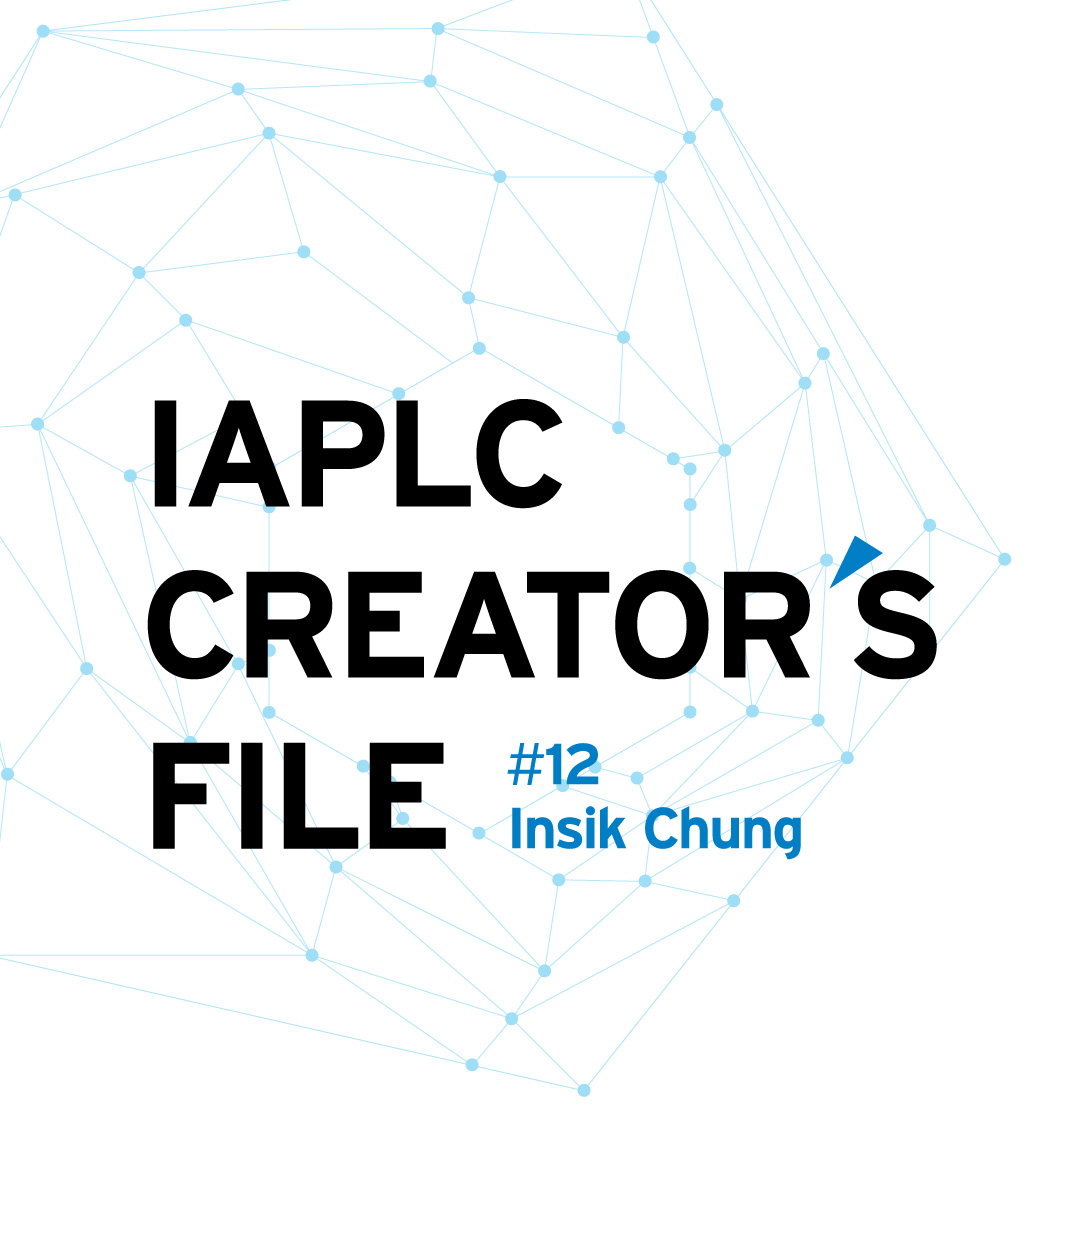 IAPLC CREATOR’S FILE #12 Insik Chung